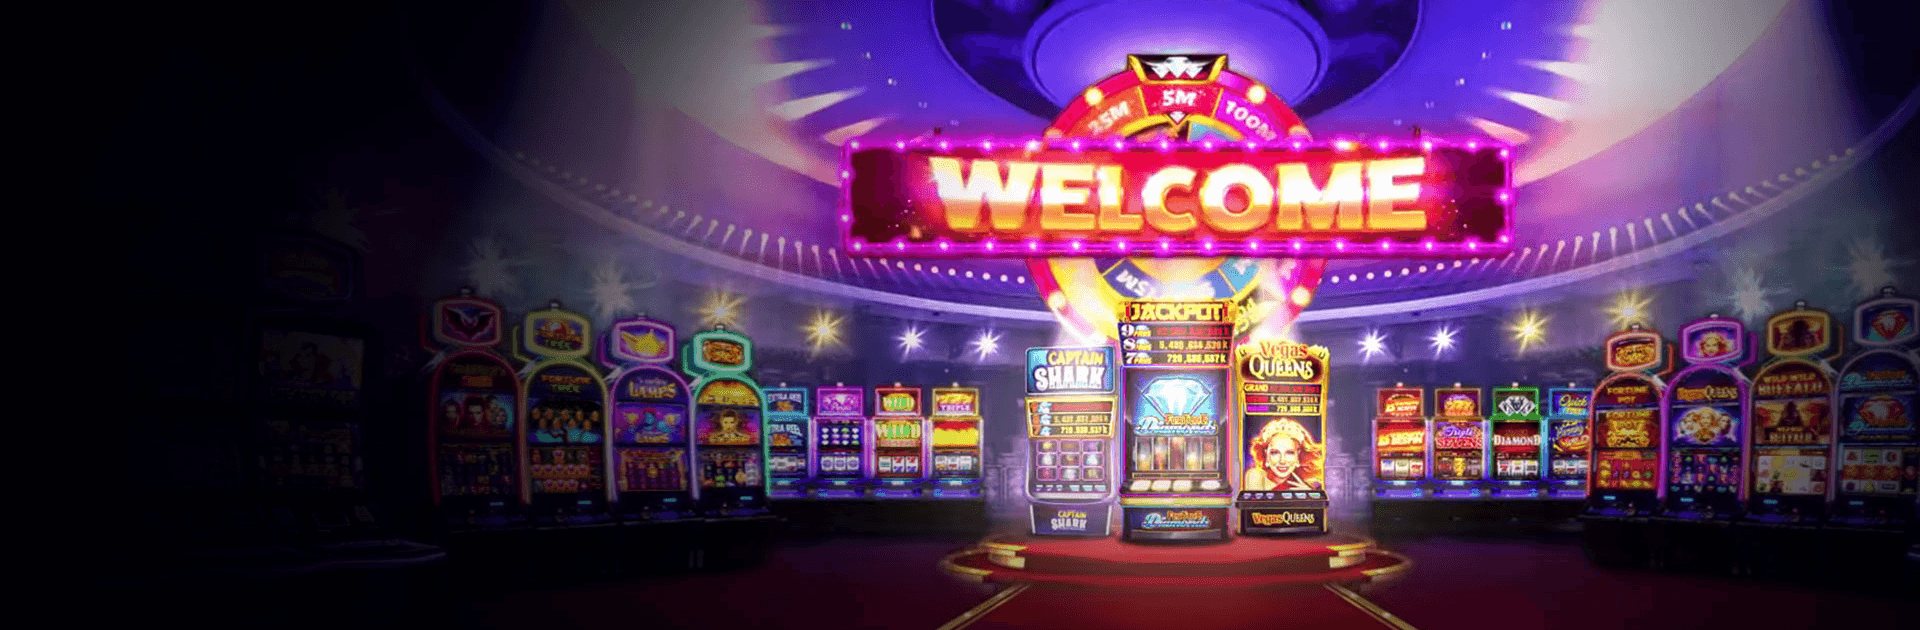 Rock N’ Cash Vegas Slot Casino